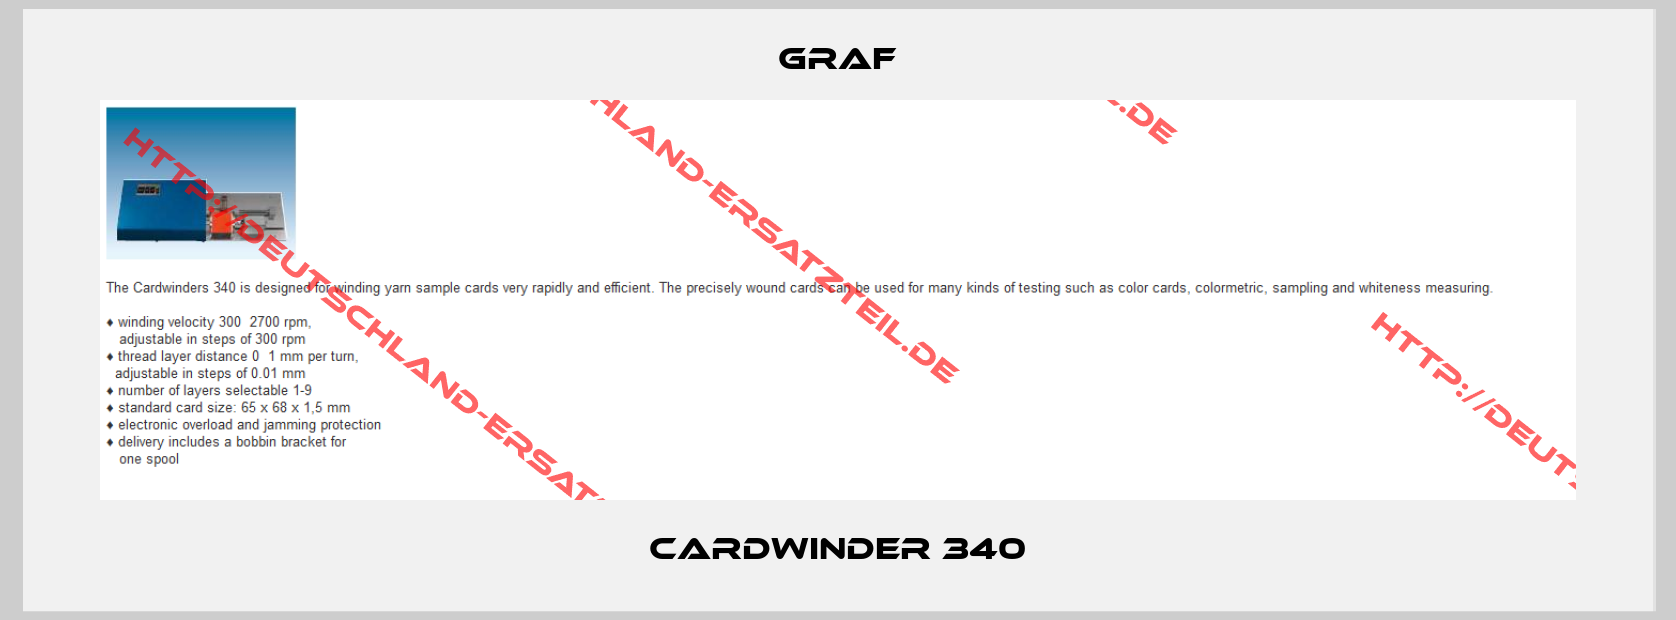 GRAF-Cardwinder 340